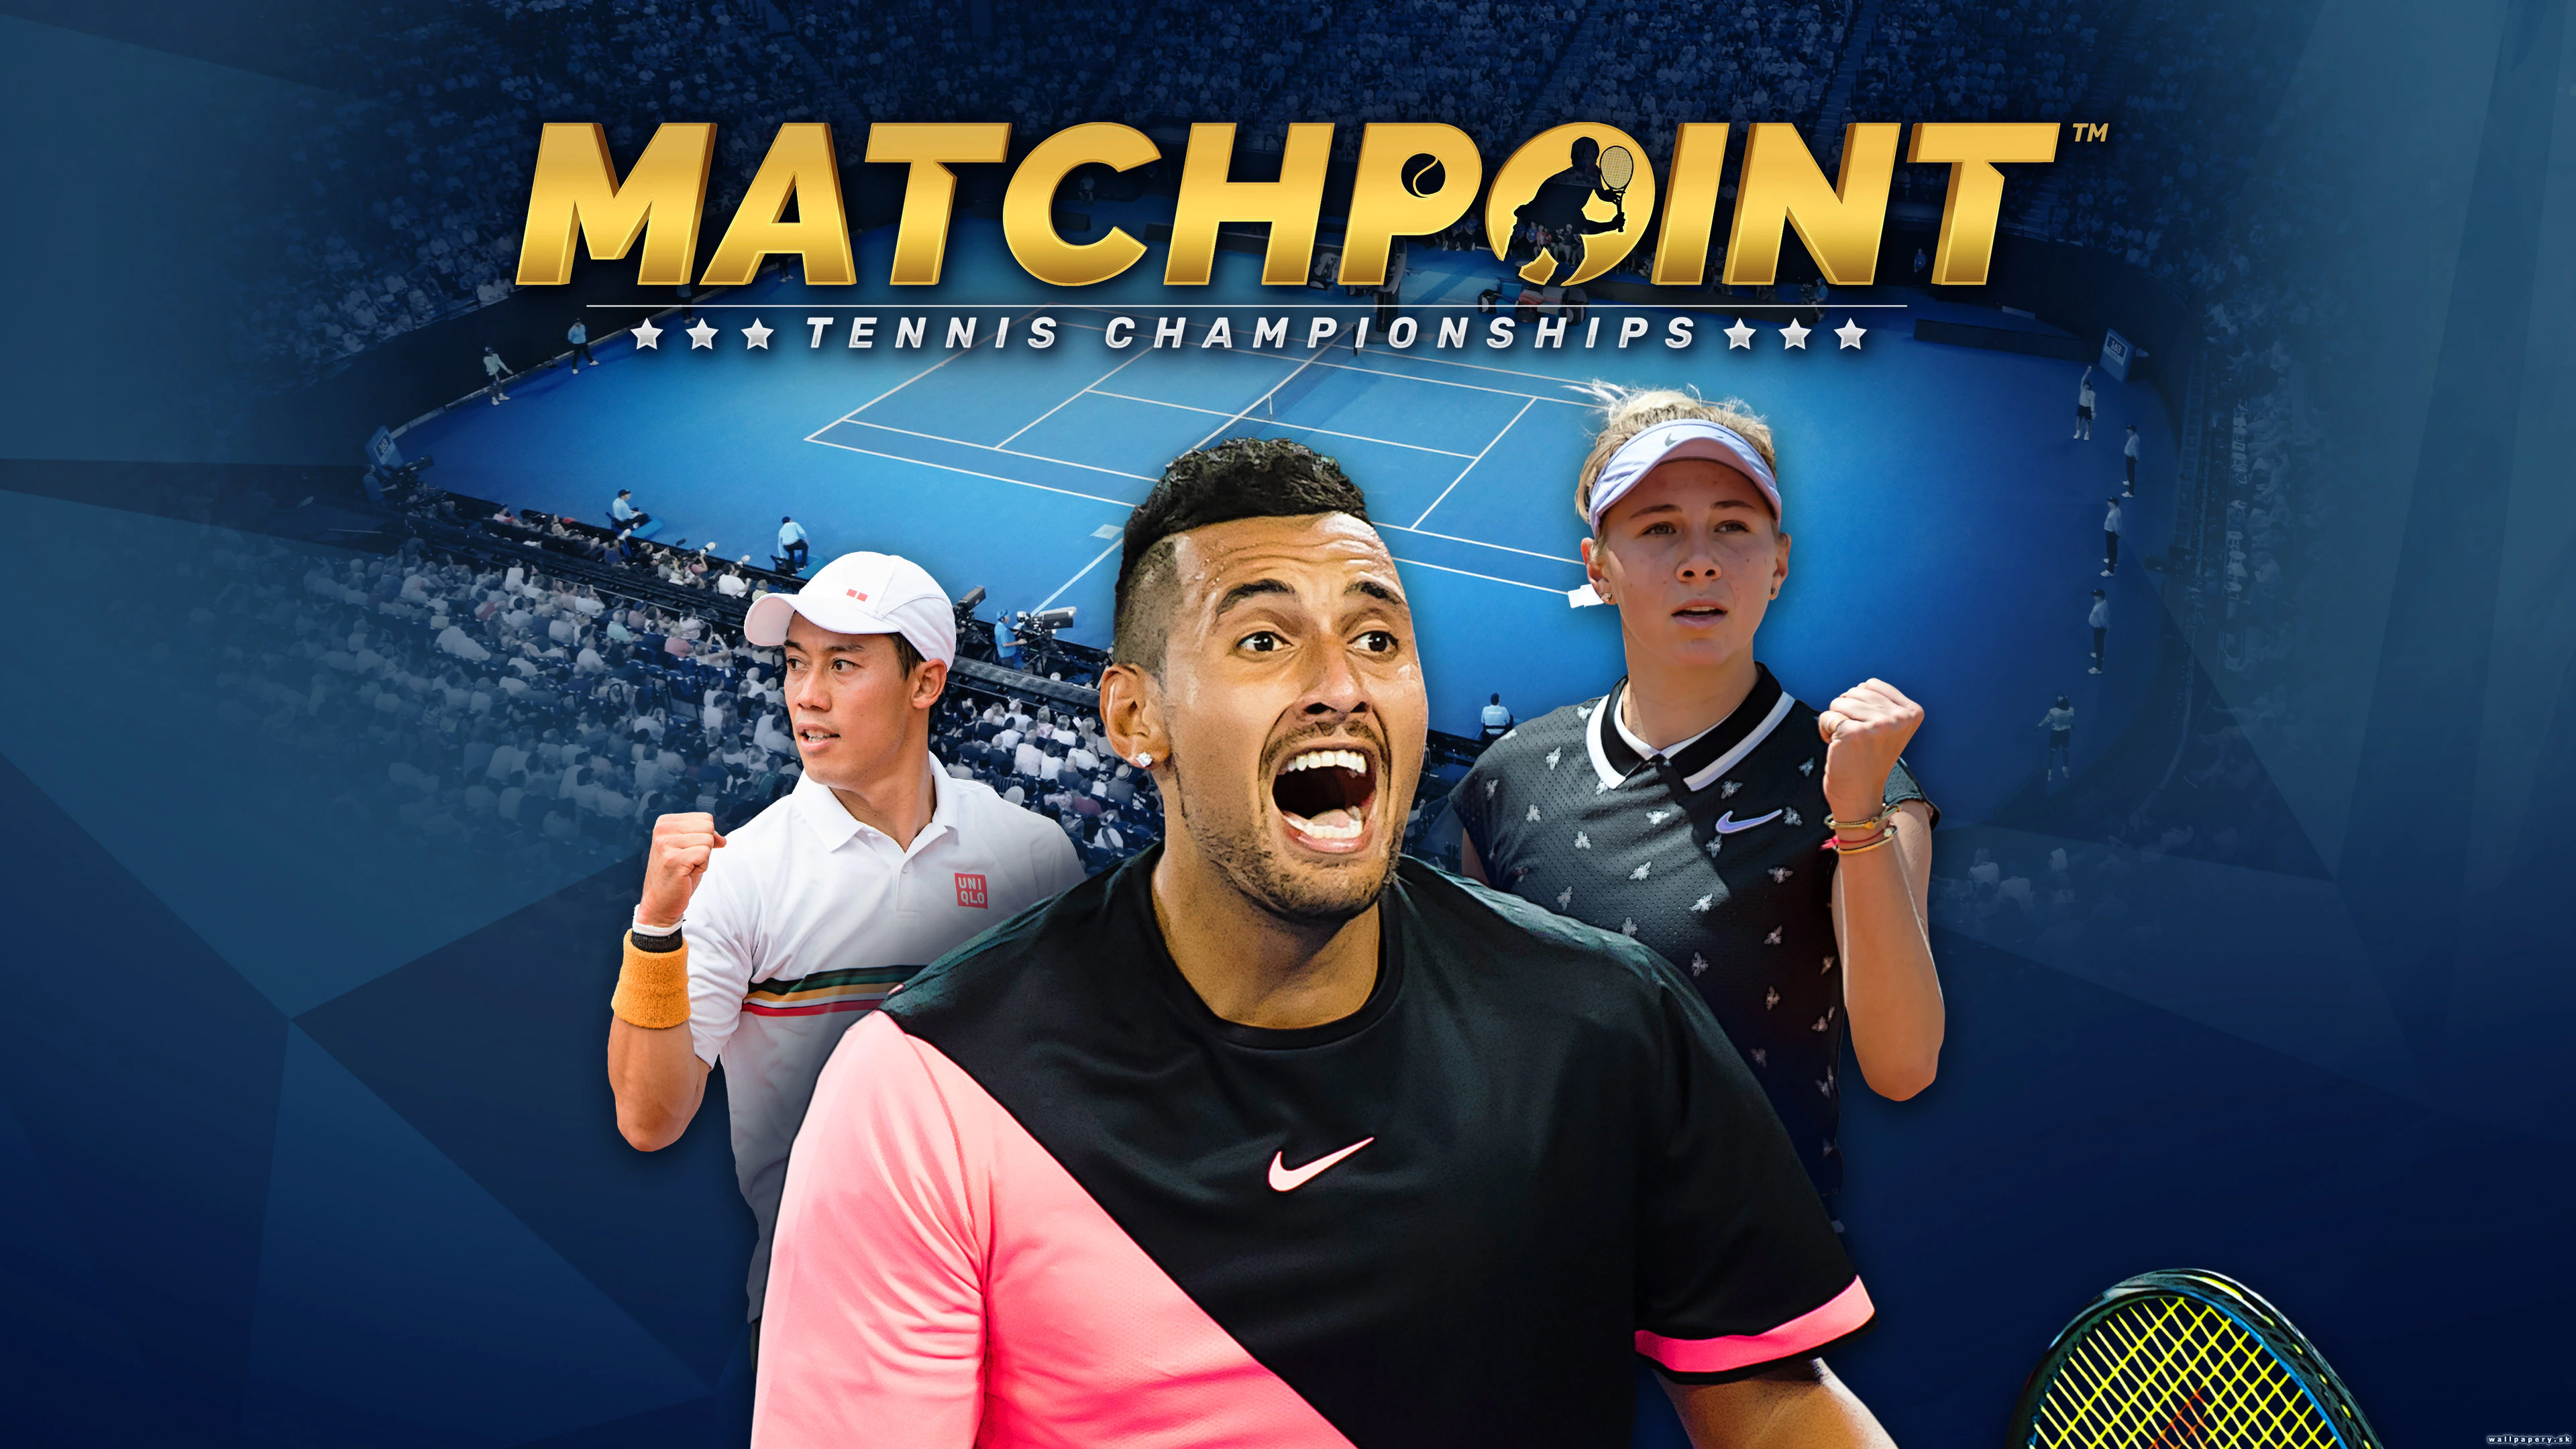 Matchpoint - Tennis Championships - wallpaper 1